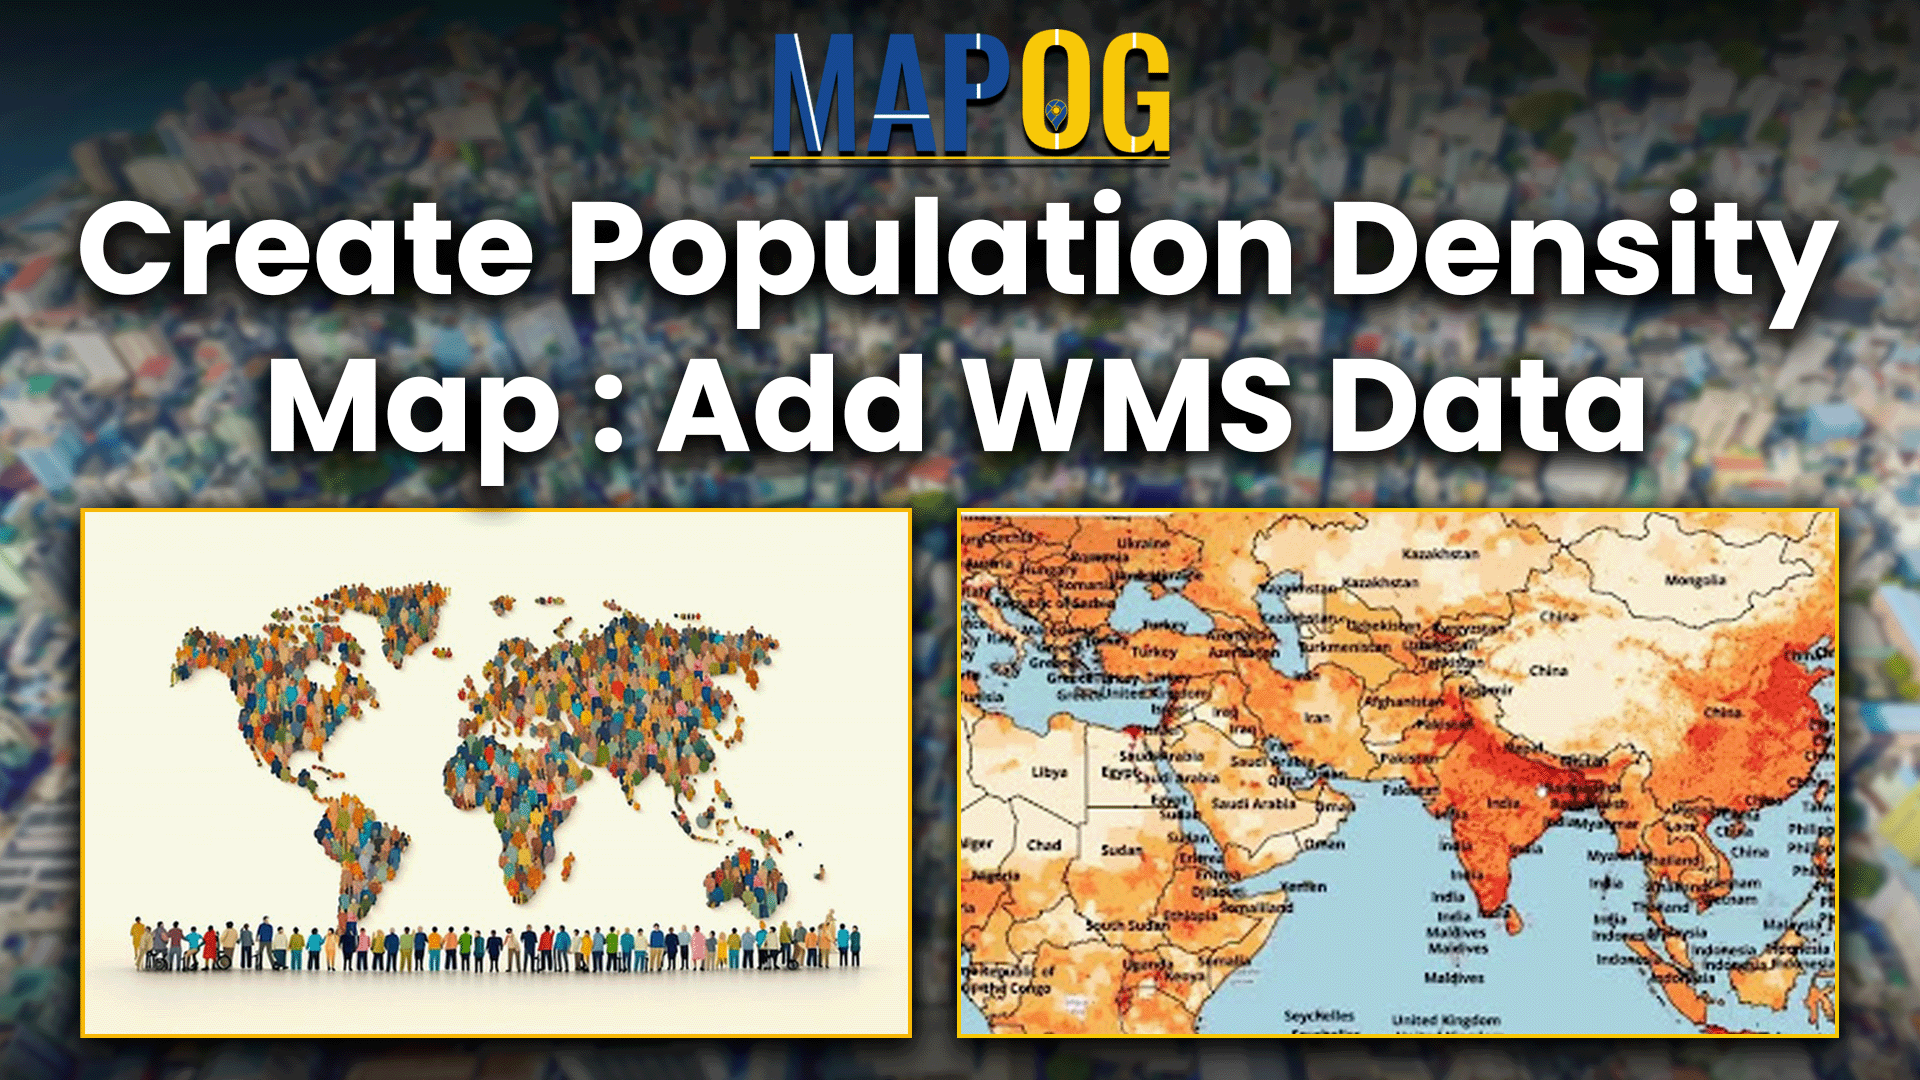 Add WMS Data : Create Population Density Map